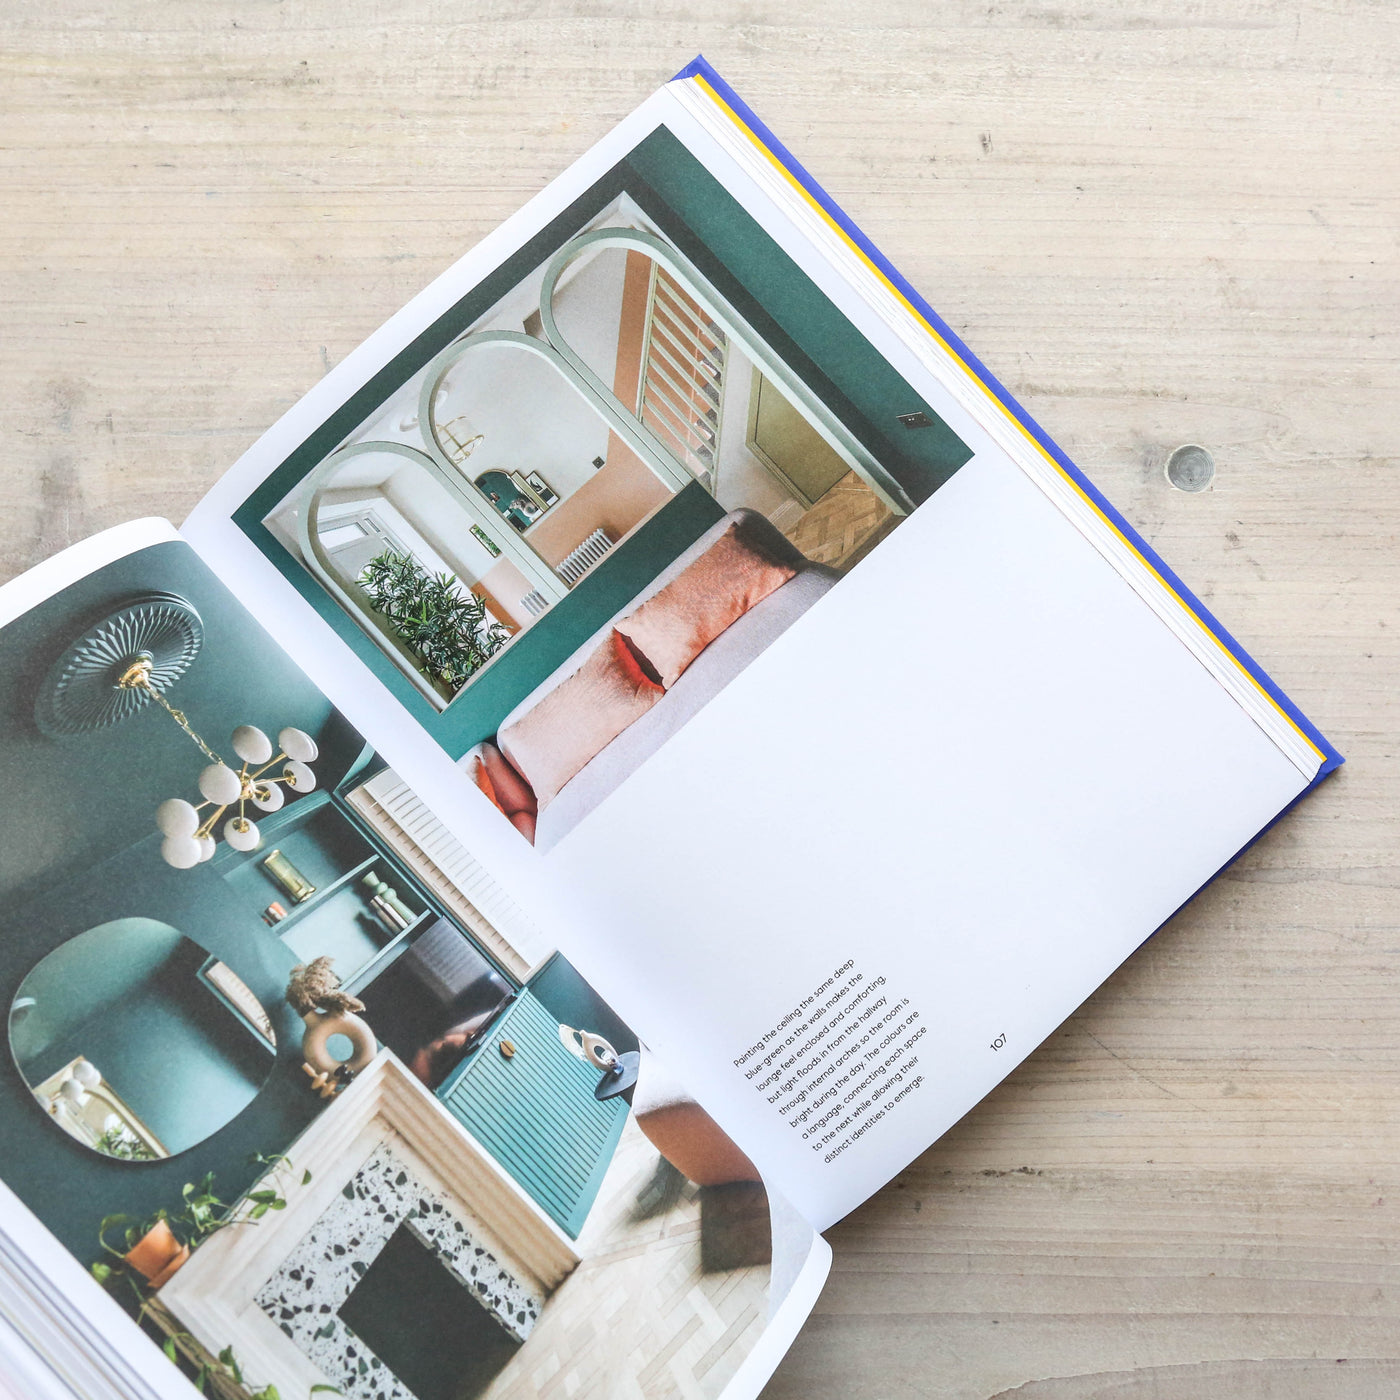 The New Colourful Home - Hoxton Mini Press Book